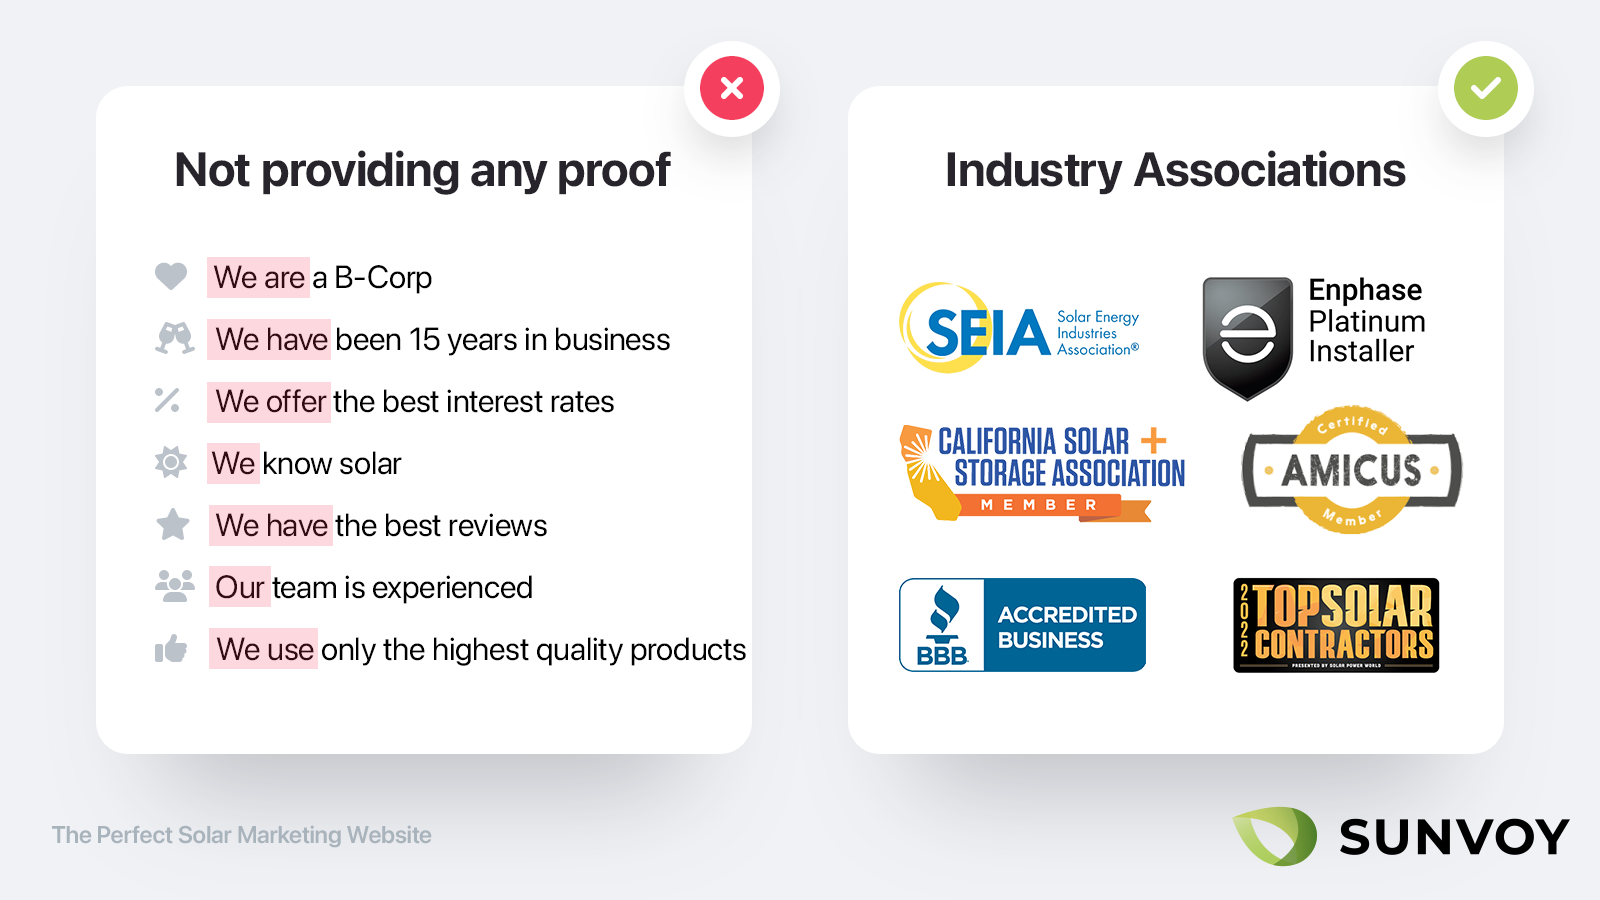 Industry associations